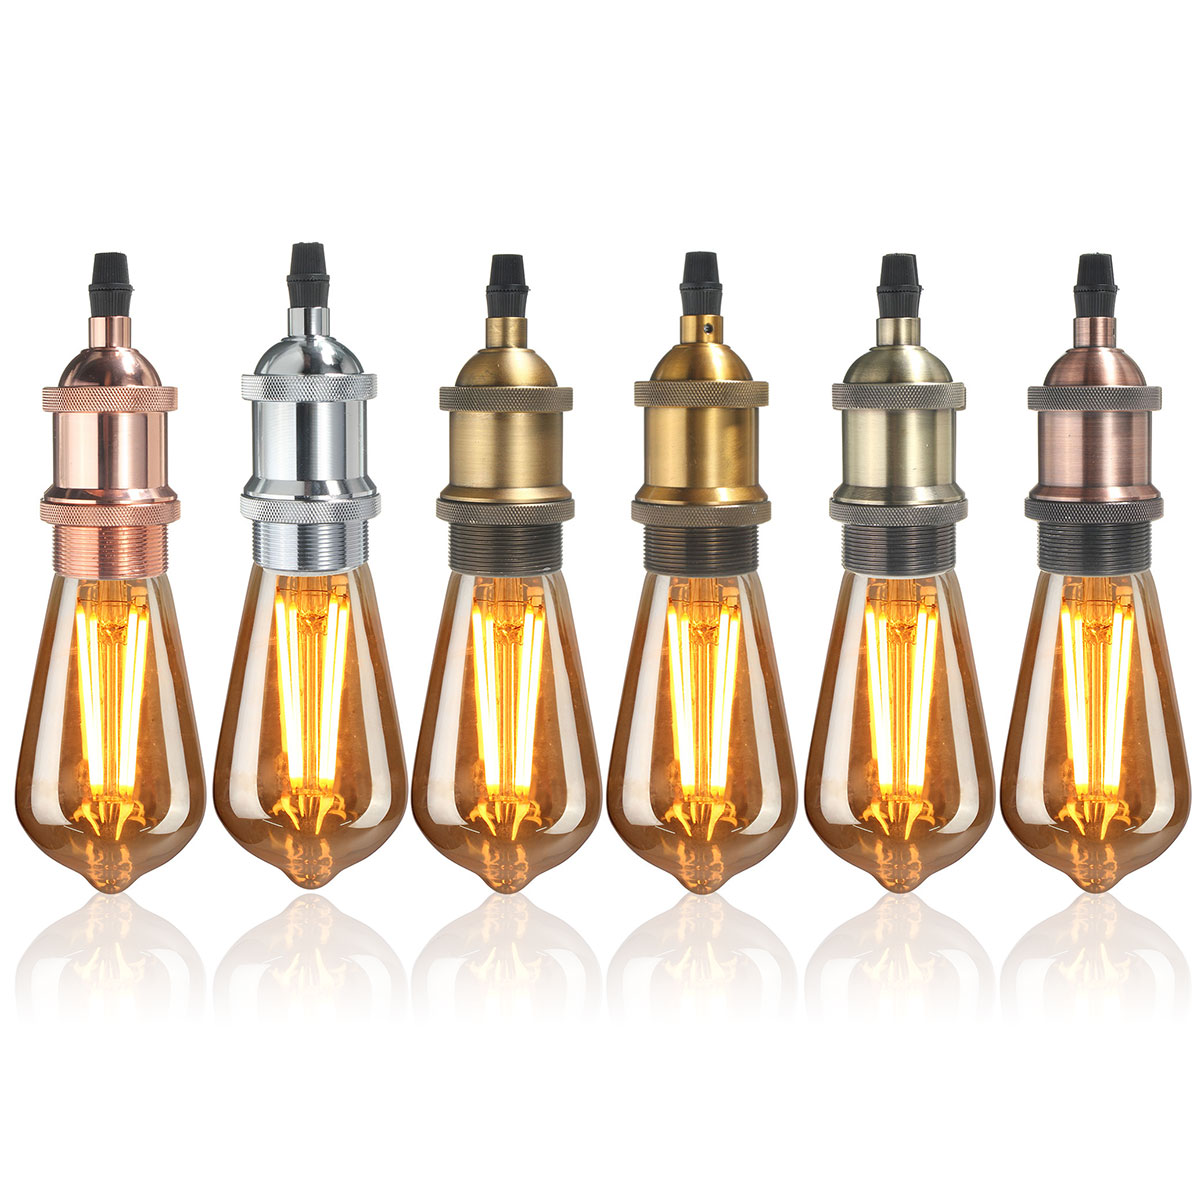 Find 110V-220V E26/E27 Bulb Adapter Copper Light Vintage Holder Retro Lamp Socket for E27 Light Bulb for Sale on Gipsybee.com with cryptocurrencies